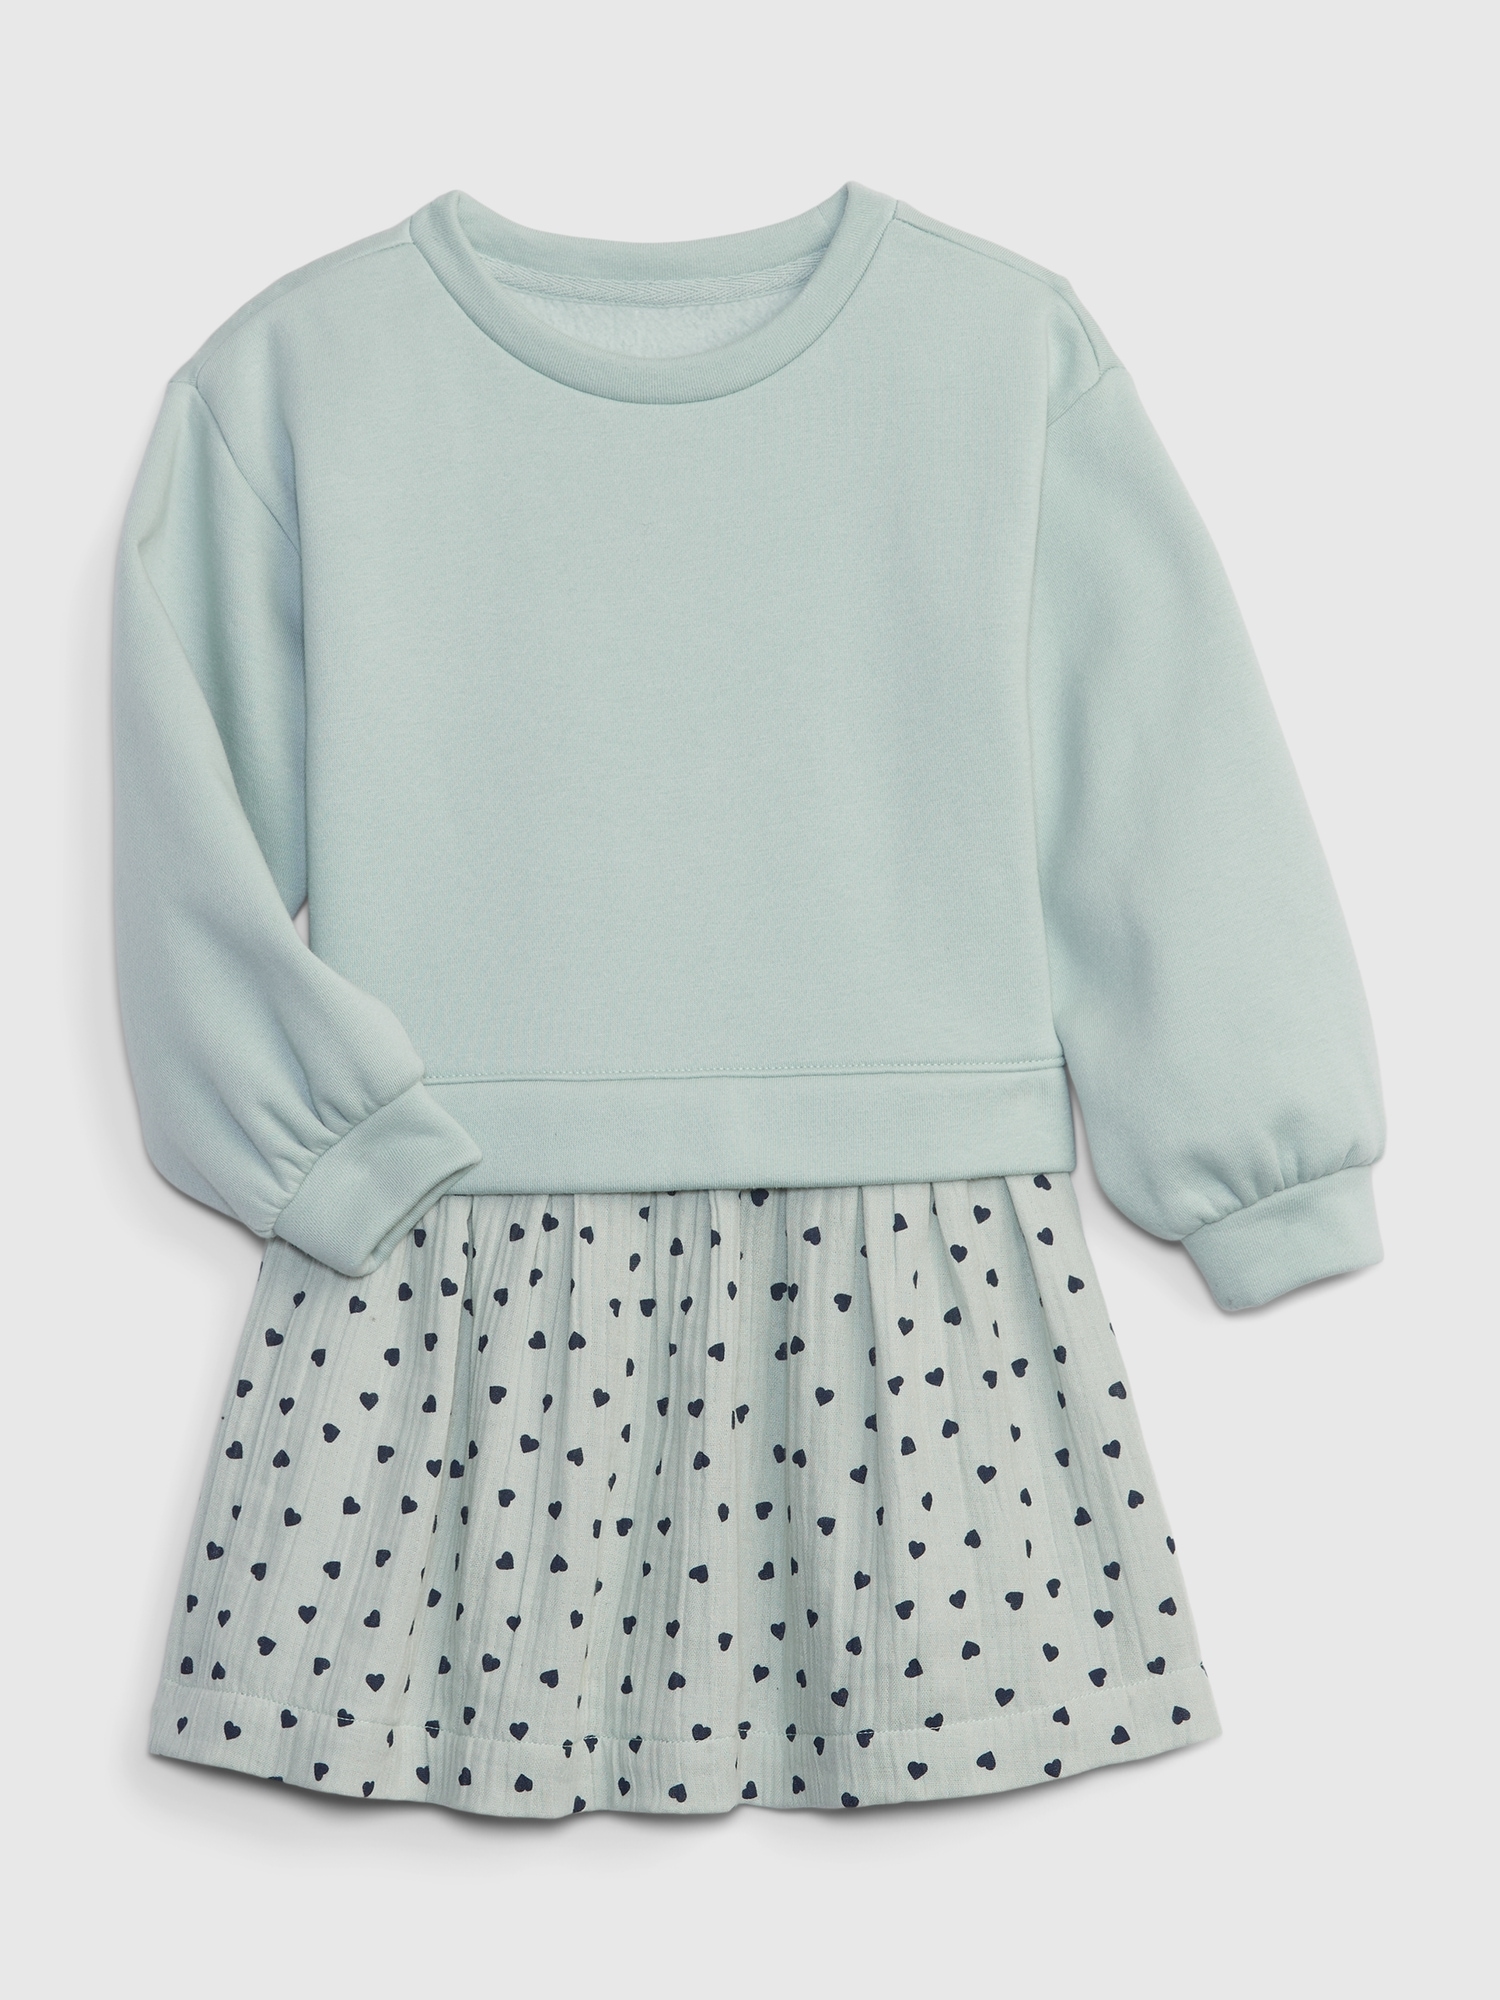 Gap Babies' Toddler 2-in-1 Sweatshirt Dress In Frothy Aqua Blue